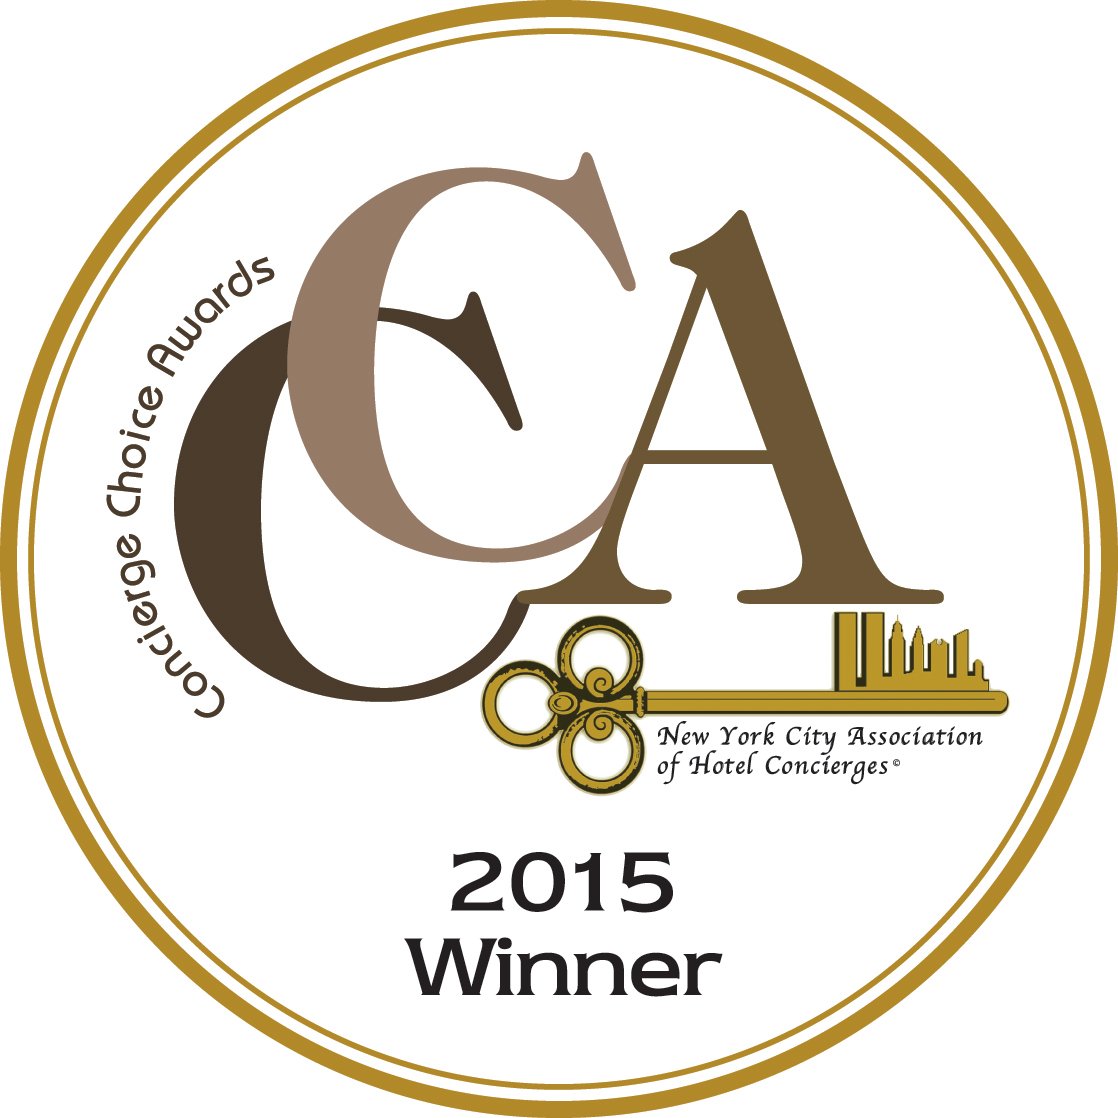 Concilrge Choice Award 2015